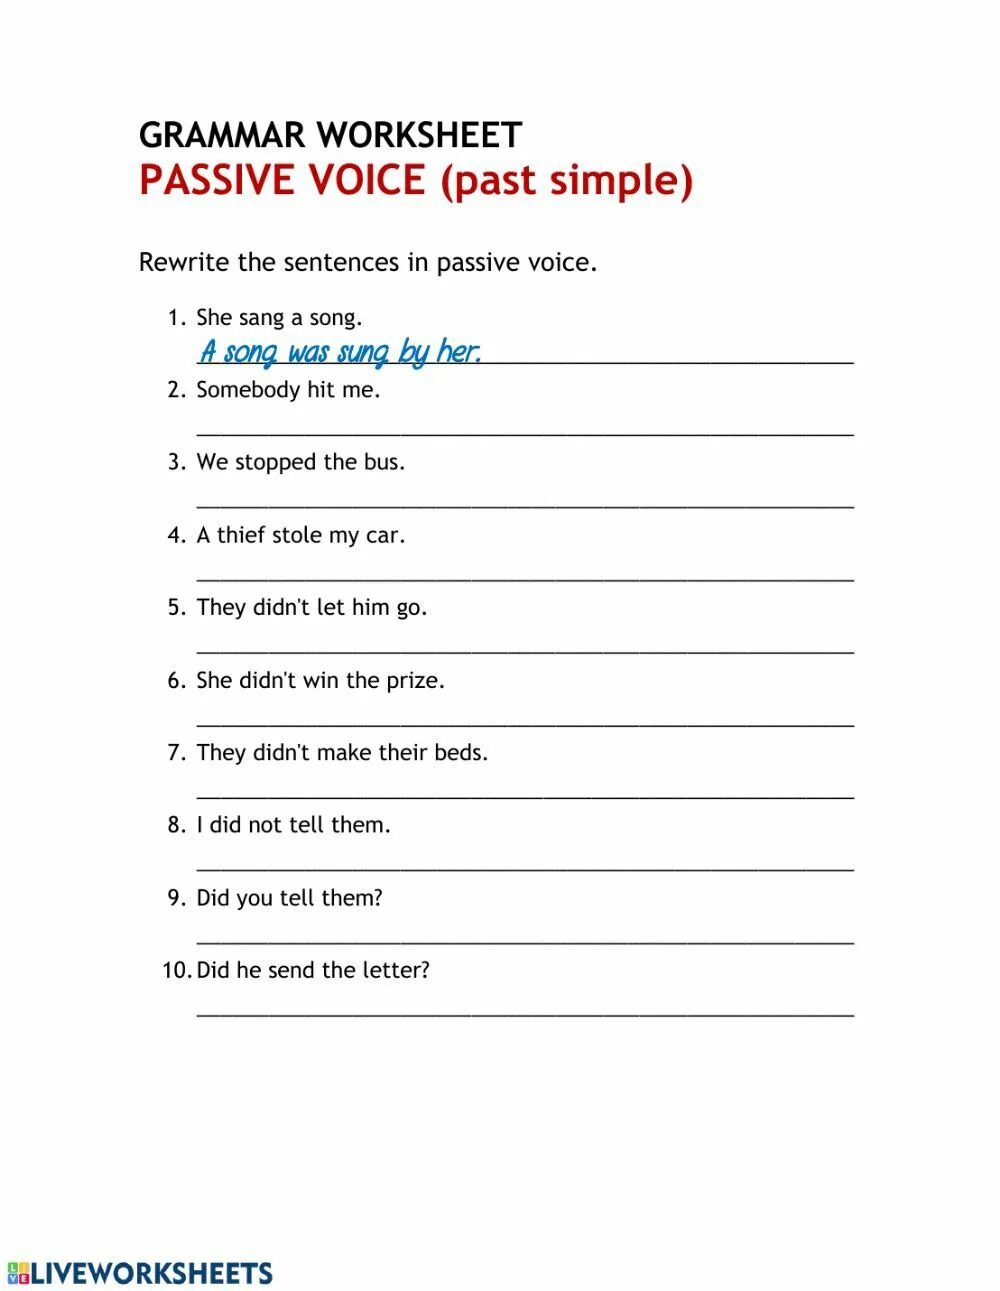 Present past simple passive worksheets. Passive Voice Worksheets. Present Passive Voice Worksheets. Past Passive Voice. Пассивный залог Worksheets.